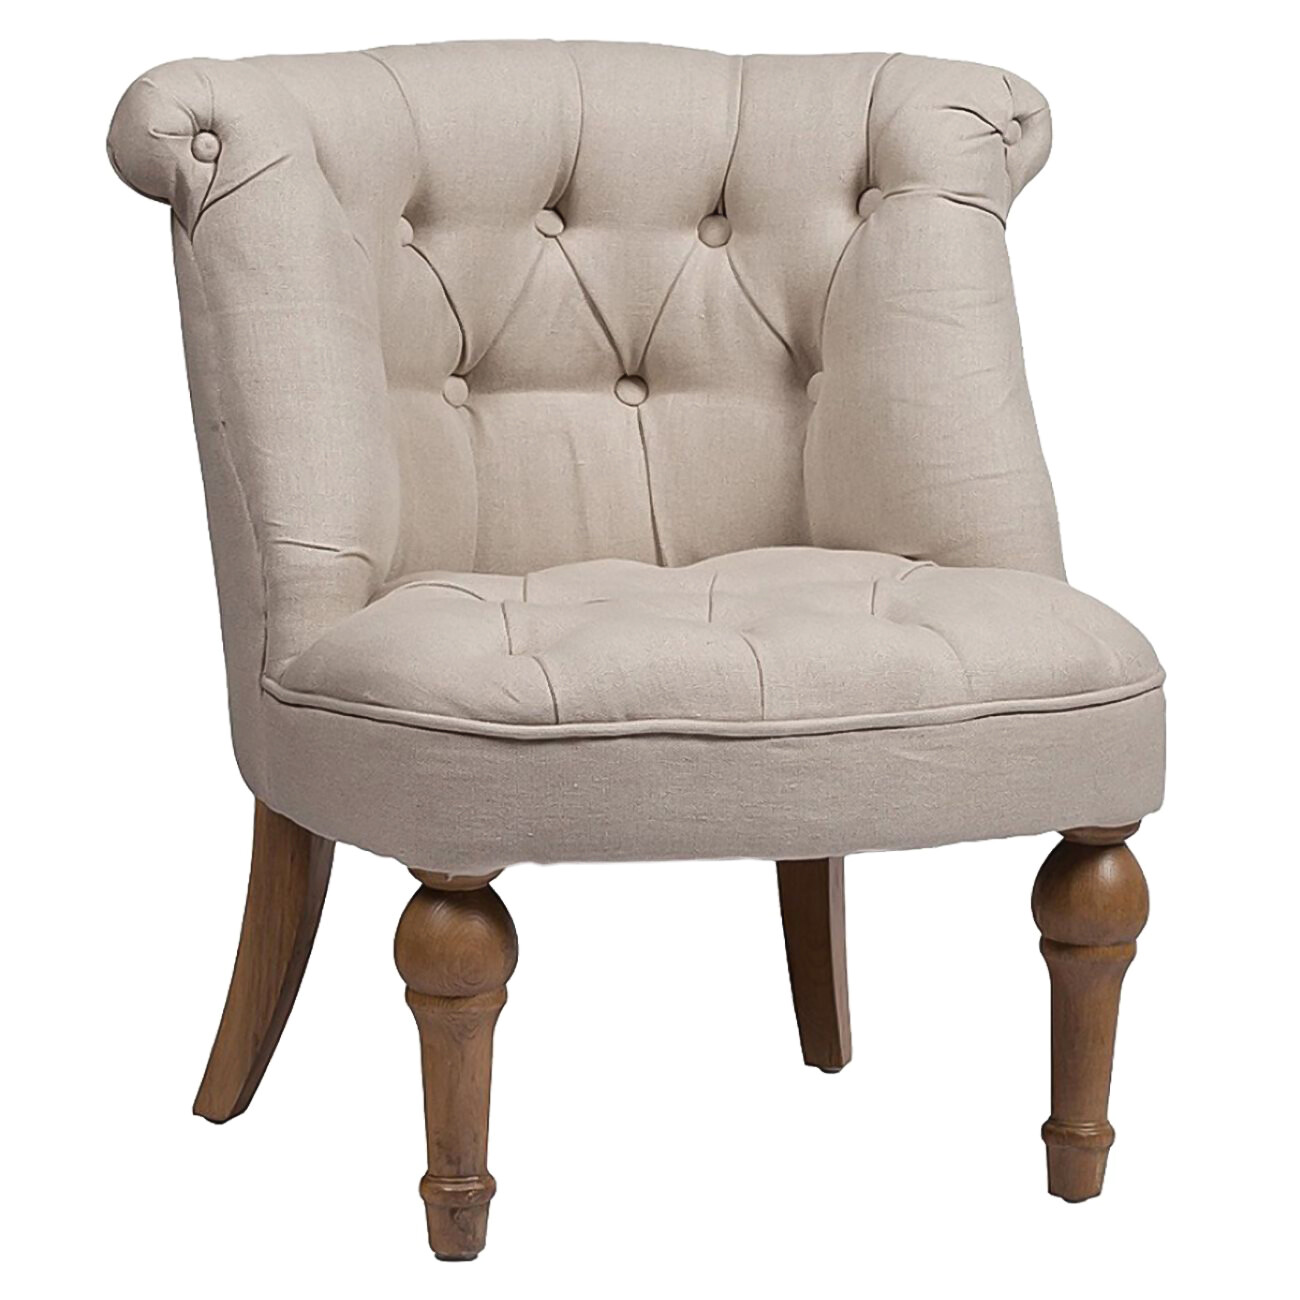 Кресло мягкое с деревянными ножками бежевое Sophie Tufted Slipper Chair